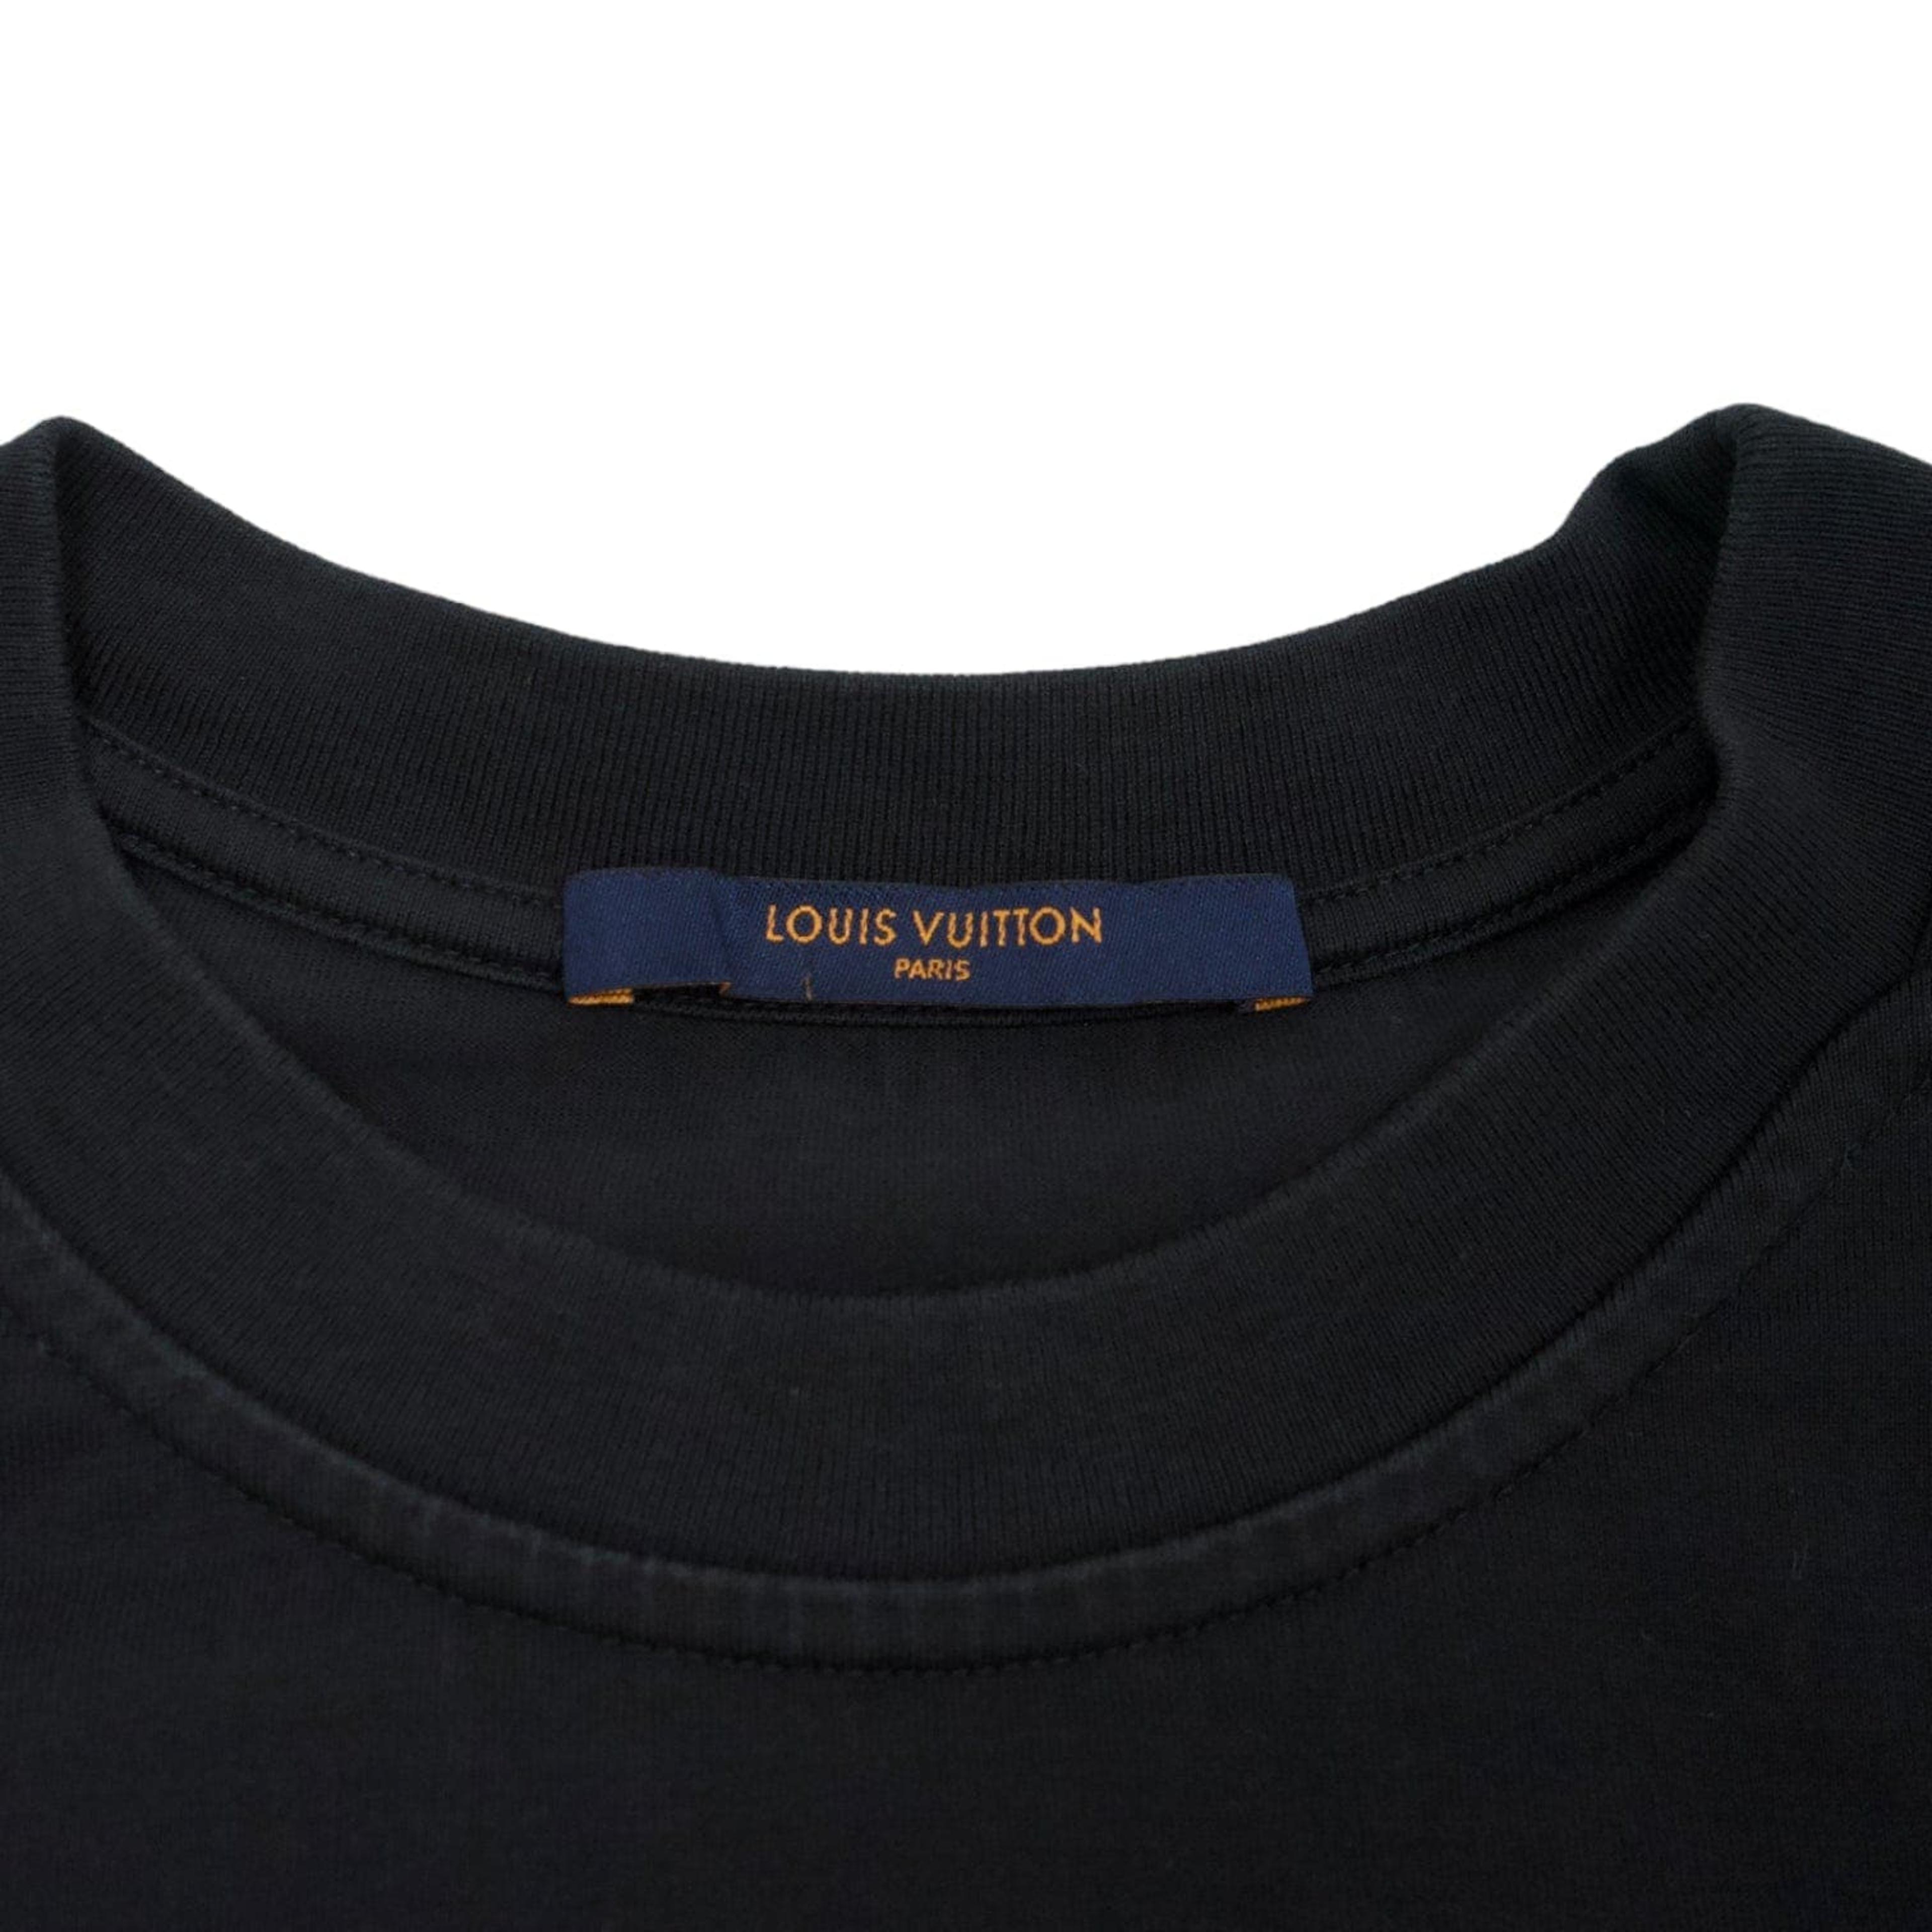 Alternate View 4 of Louis Vuitton x NBA Basketball Play Short Sleeve Tee Shirt Black